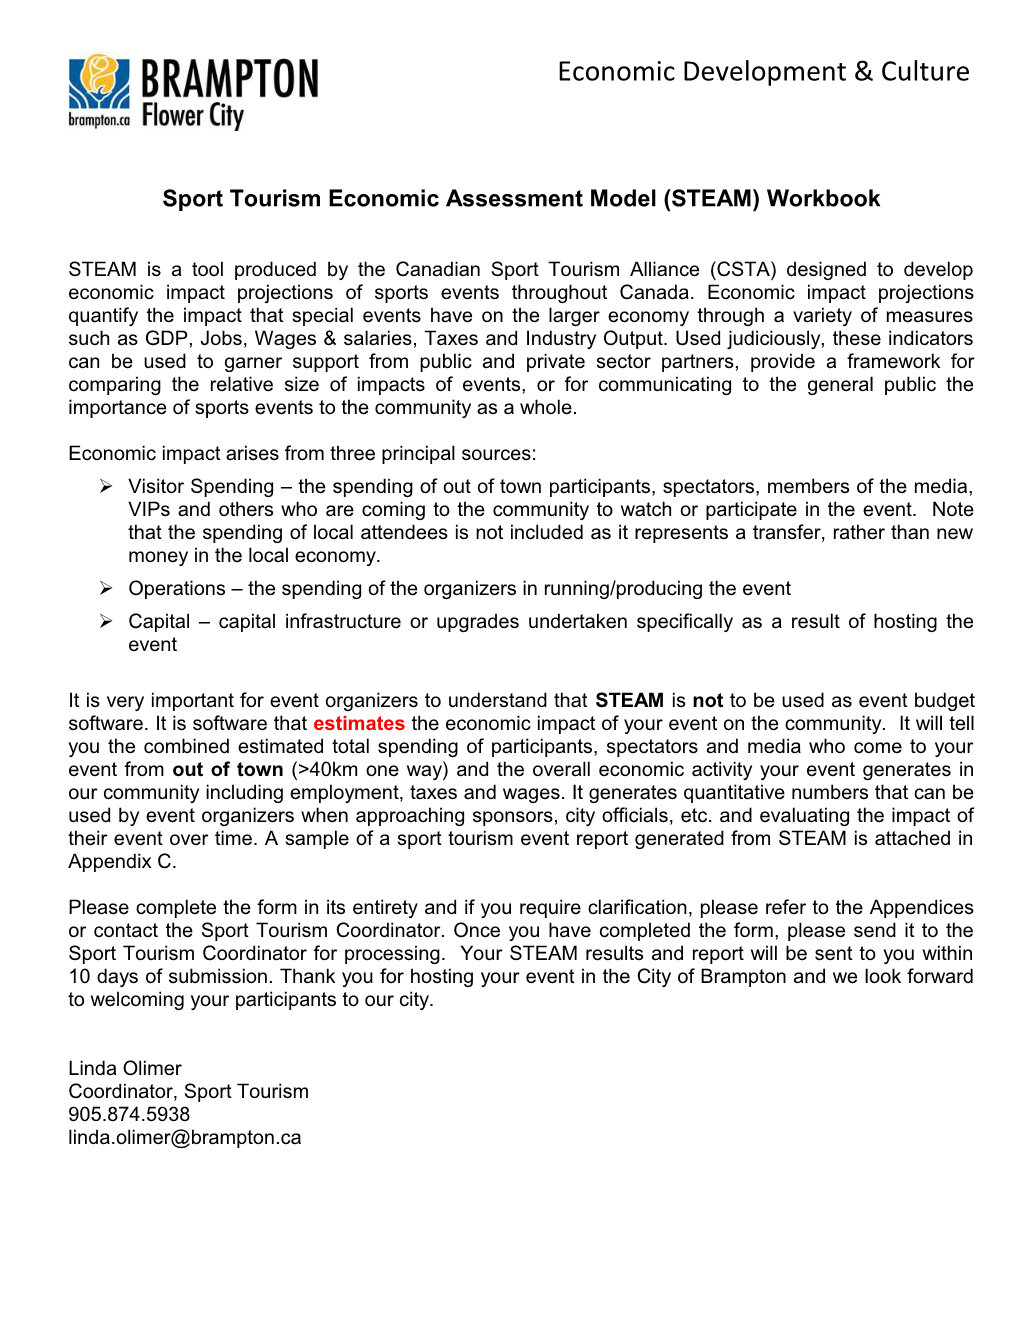 Sport Tourism Economic Assessment Model (STEAM) Workbook